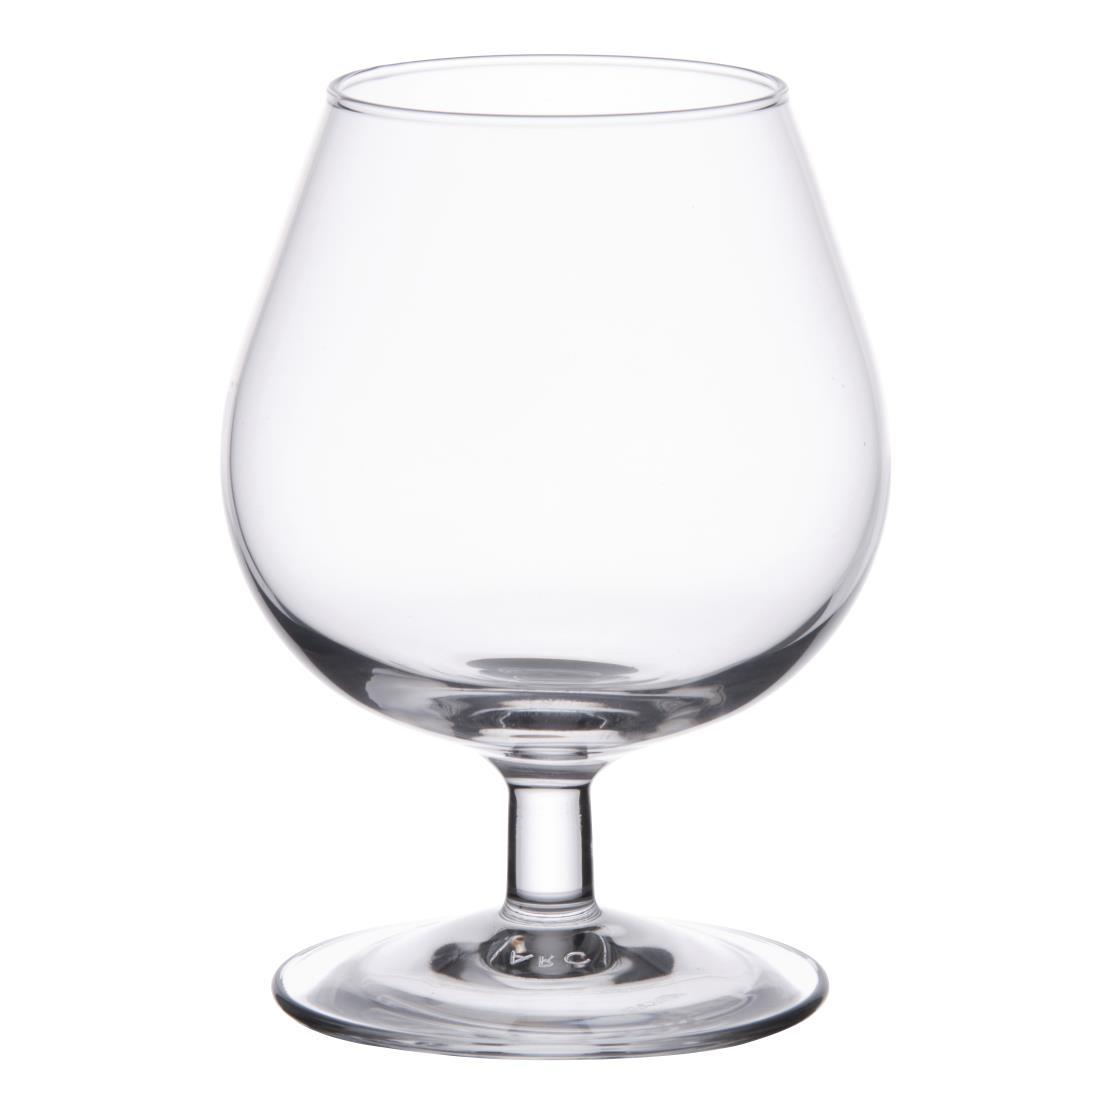 Arcoroc Brandy / Cognac Glasses 250ml (Pack of 6) - DP094  - 1